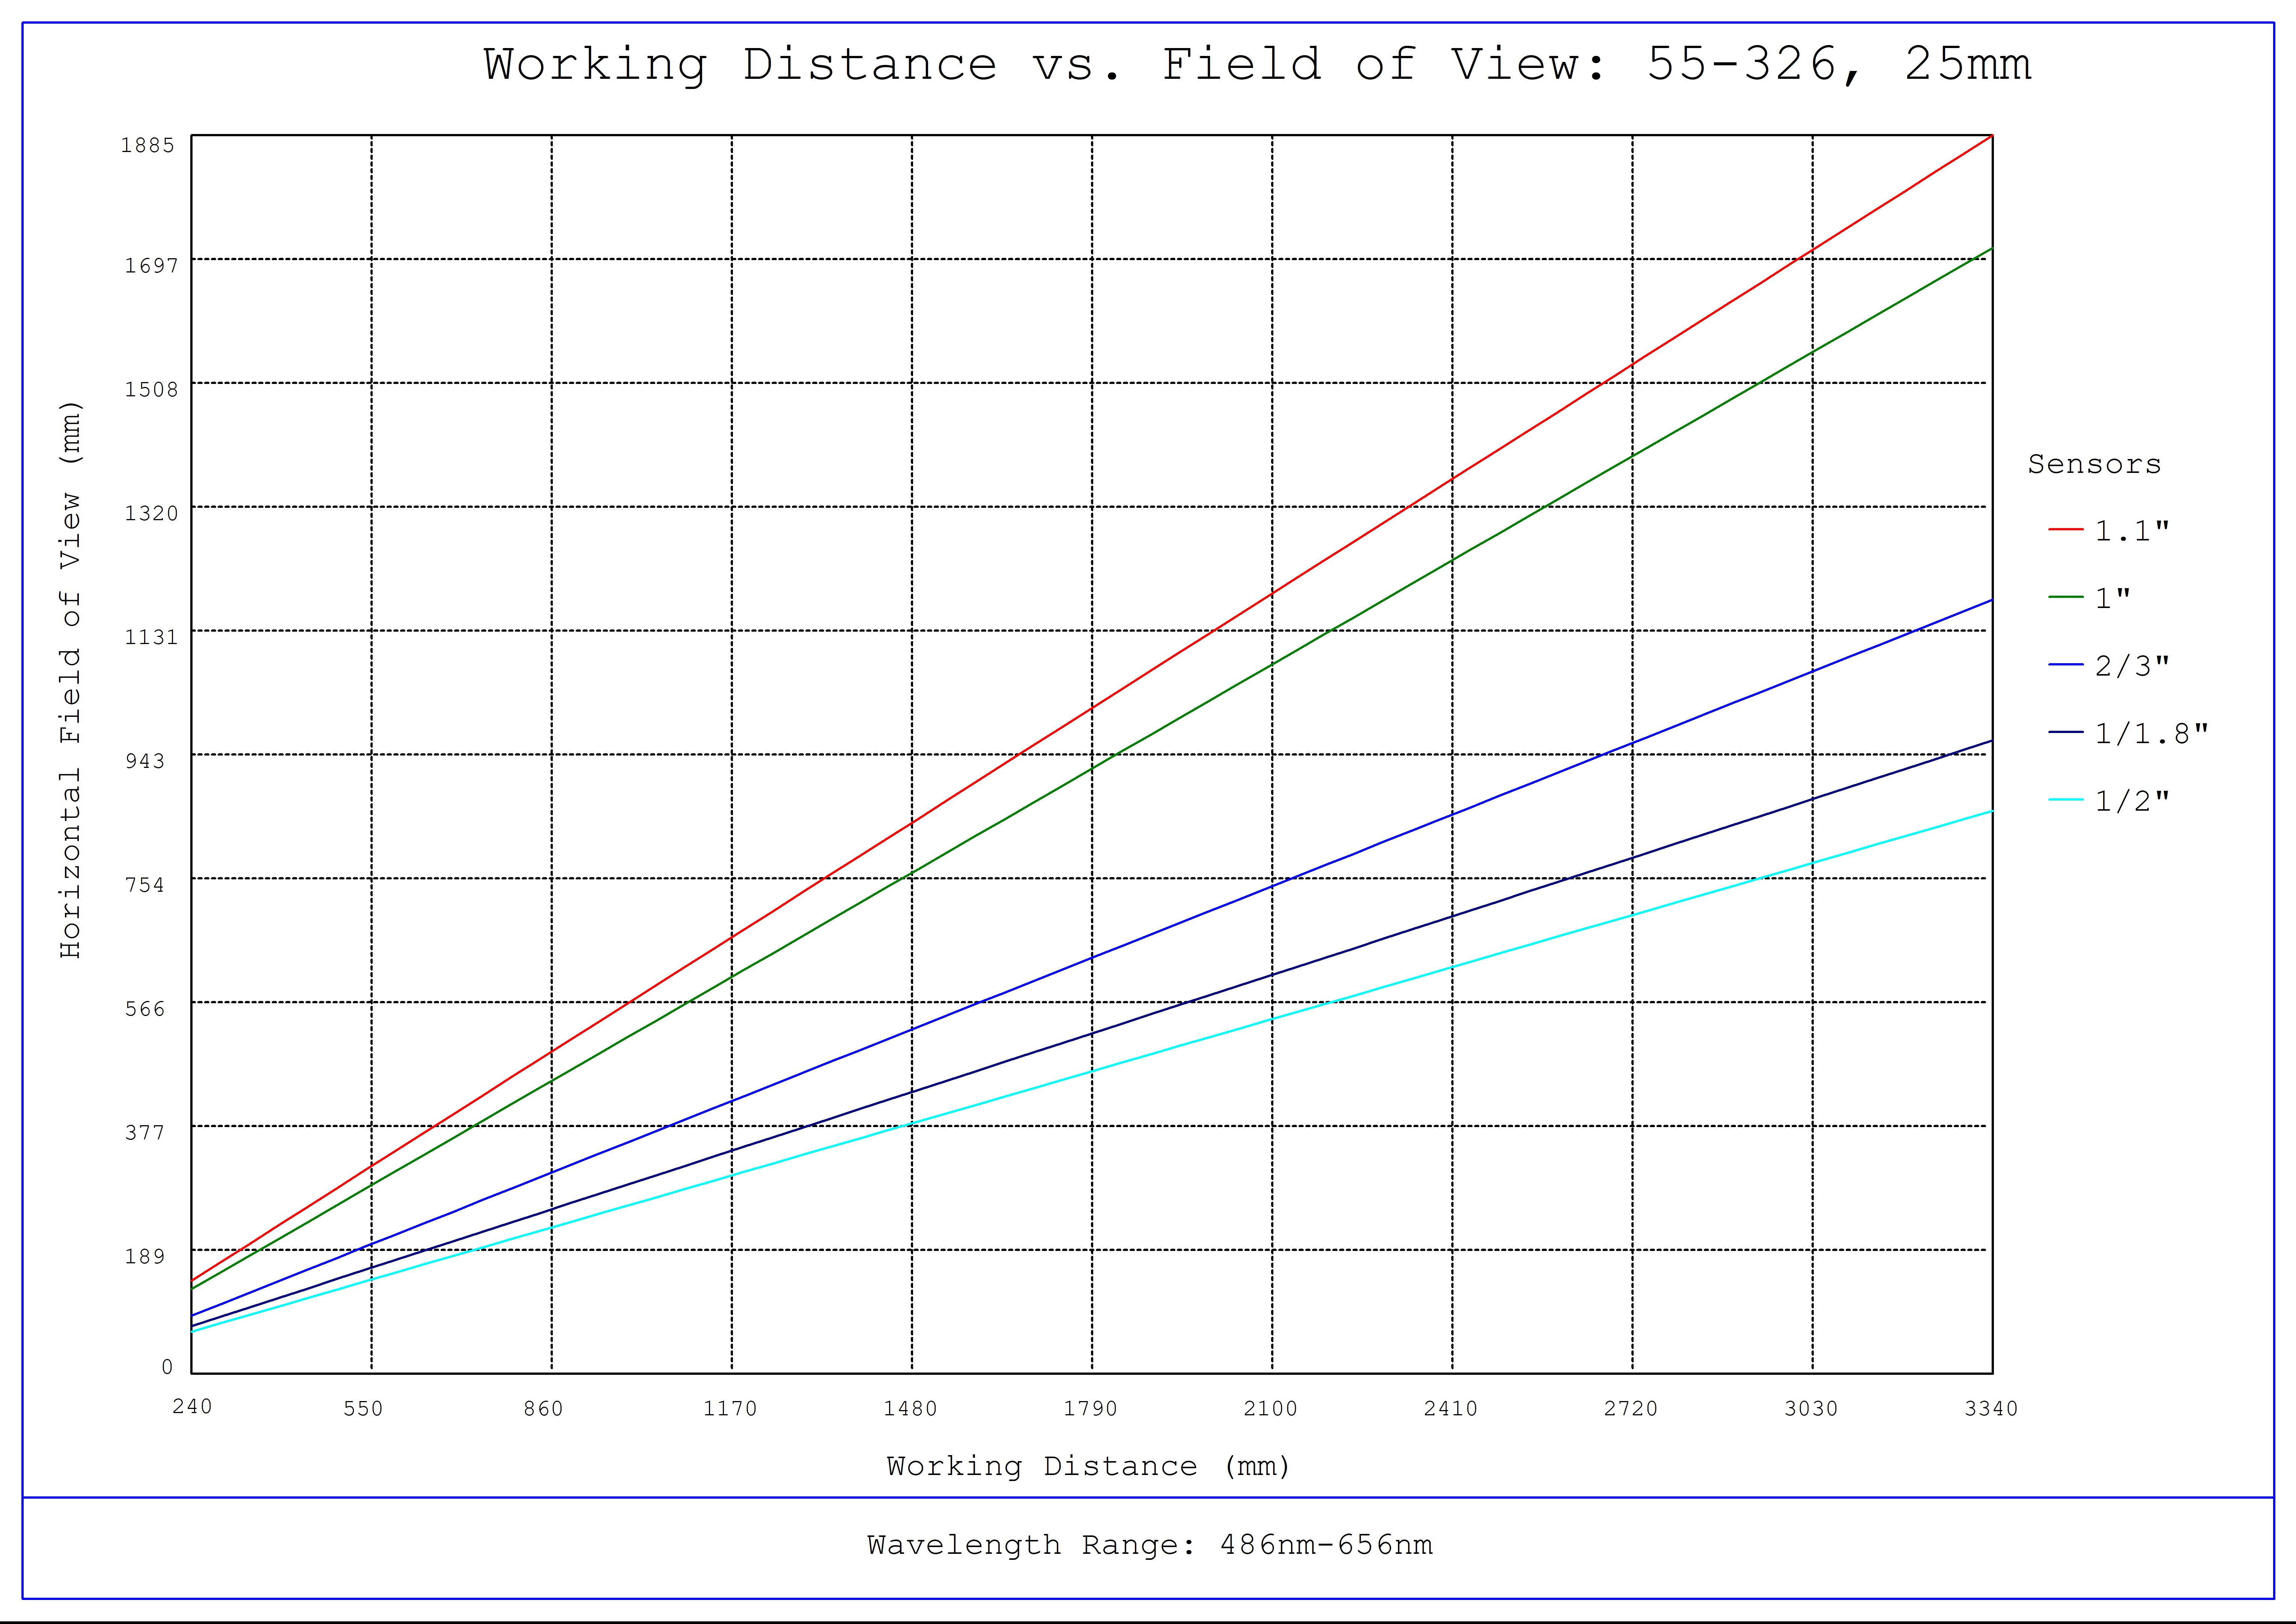 #55-326, 25mm DG Series Fixed Focal Length Lens, Working Distance versus Field of View Plot